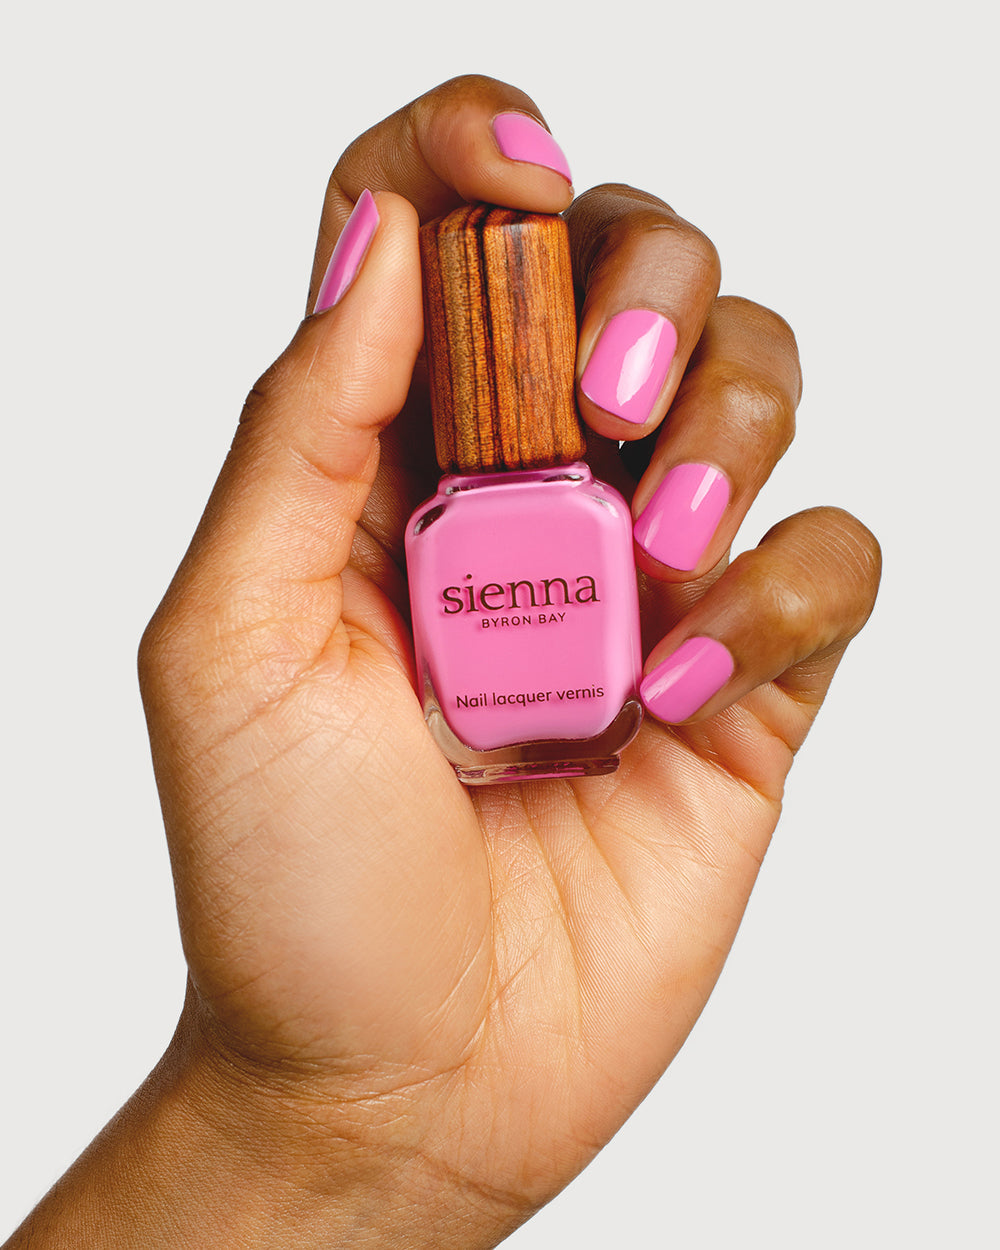 Bright mid-tone fuchsia nail polish hand swatch on medium skin tone holding sienna bottle